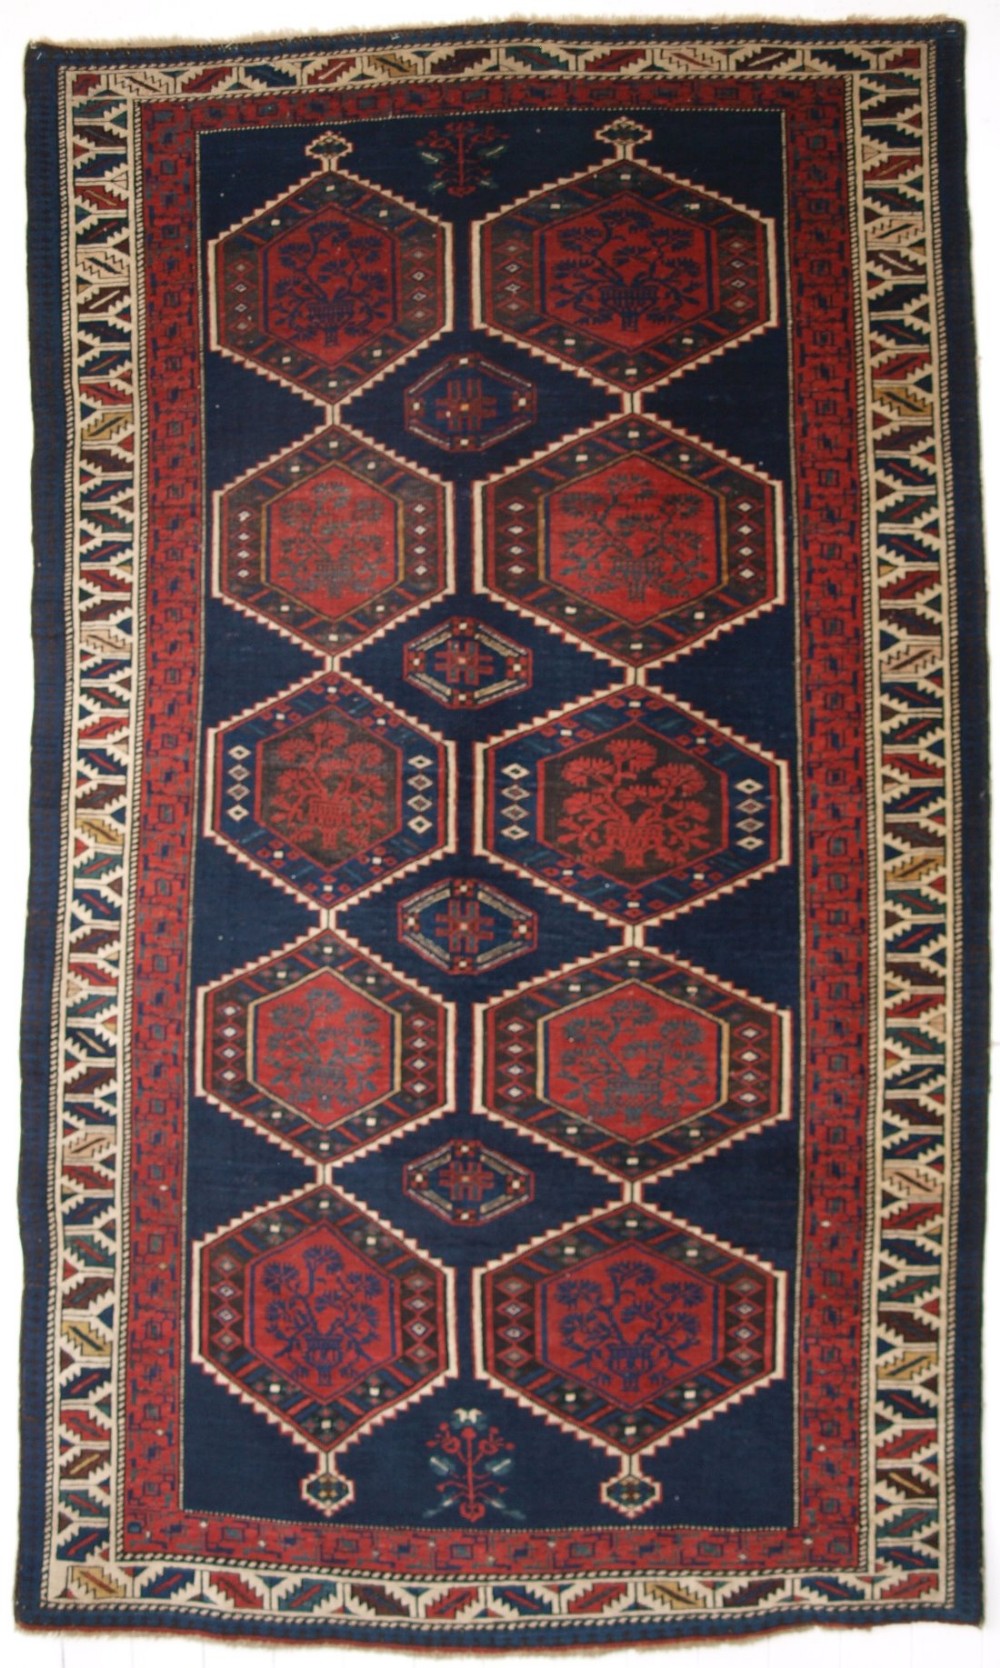 antique caucasian kuba shirvan rug with shrub design late 19th century